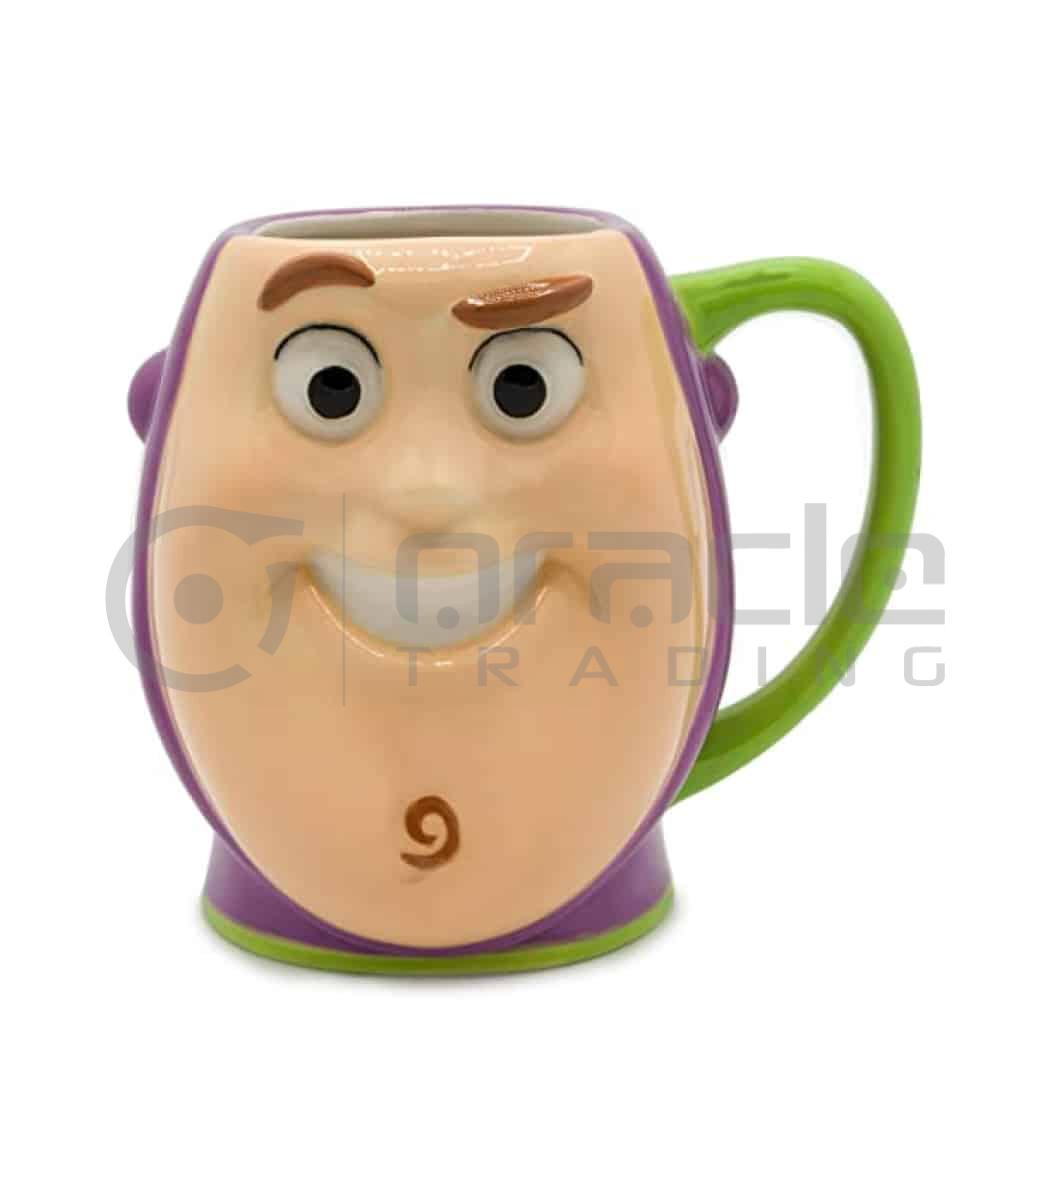 Toy Story 3D Shaped Mug - Buzz Lightyear